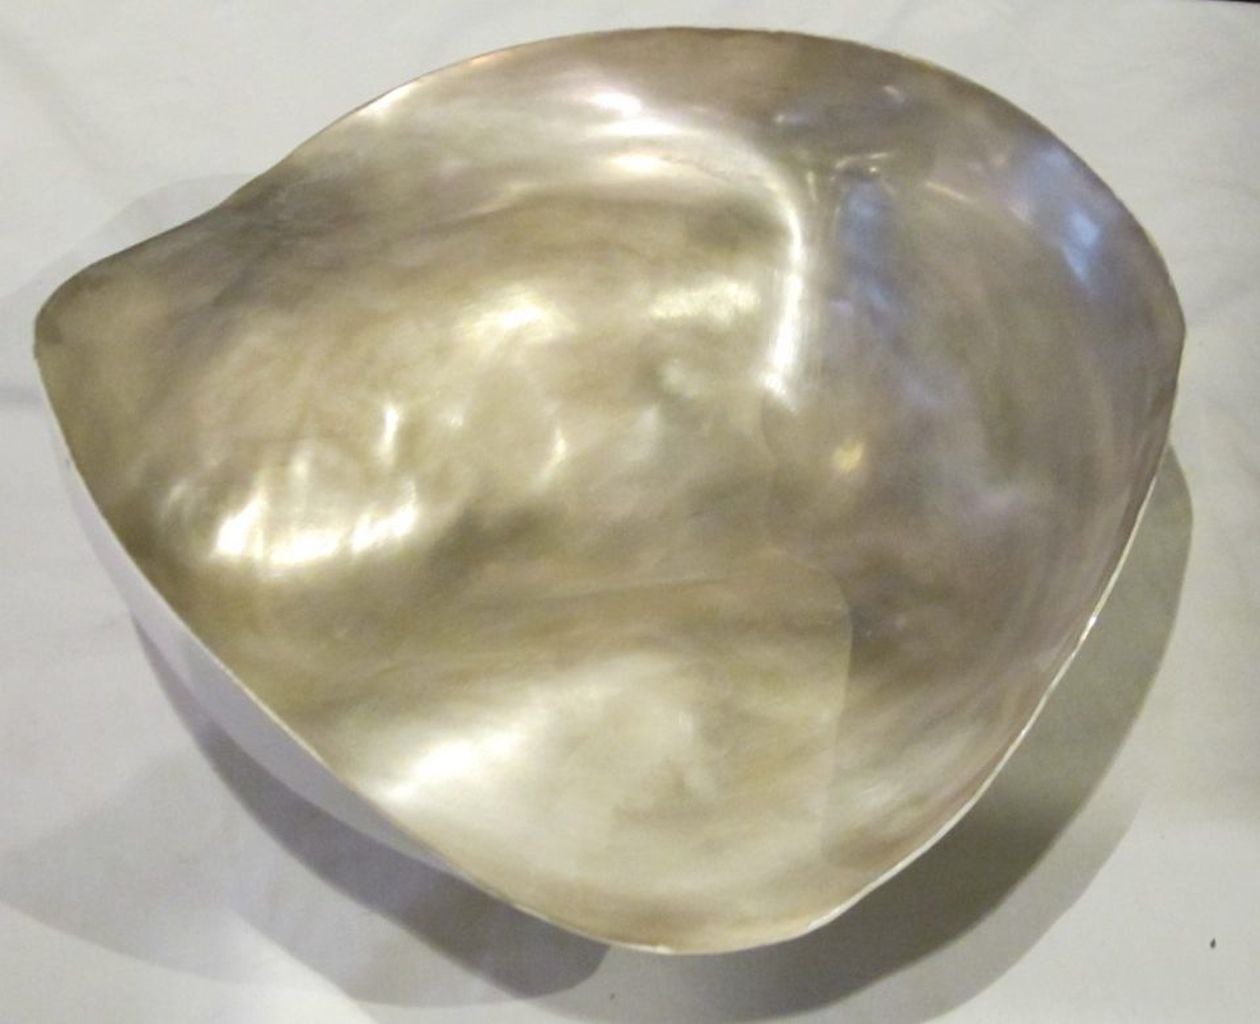 Italian handmade medium silver leaf bowl in a free-form shape.
Silver leaf on cream fine ceramic.
Similar bowls are available in 7